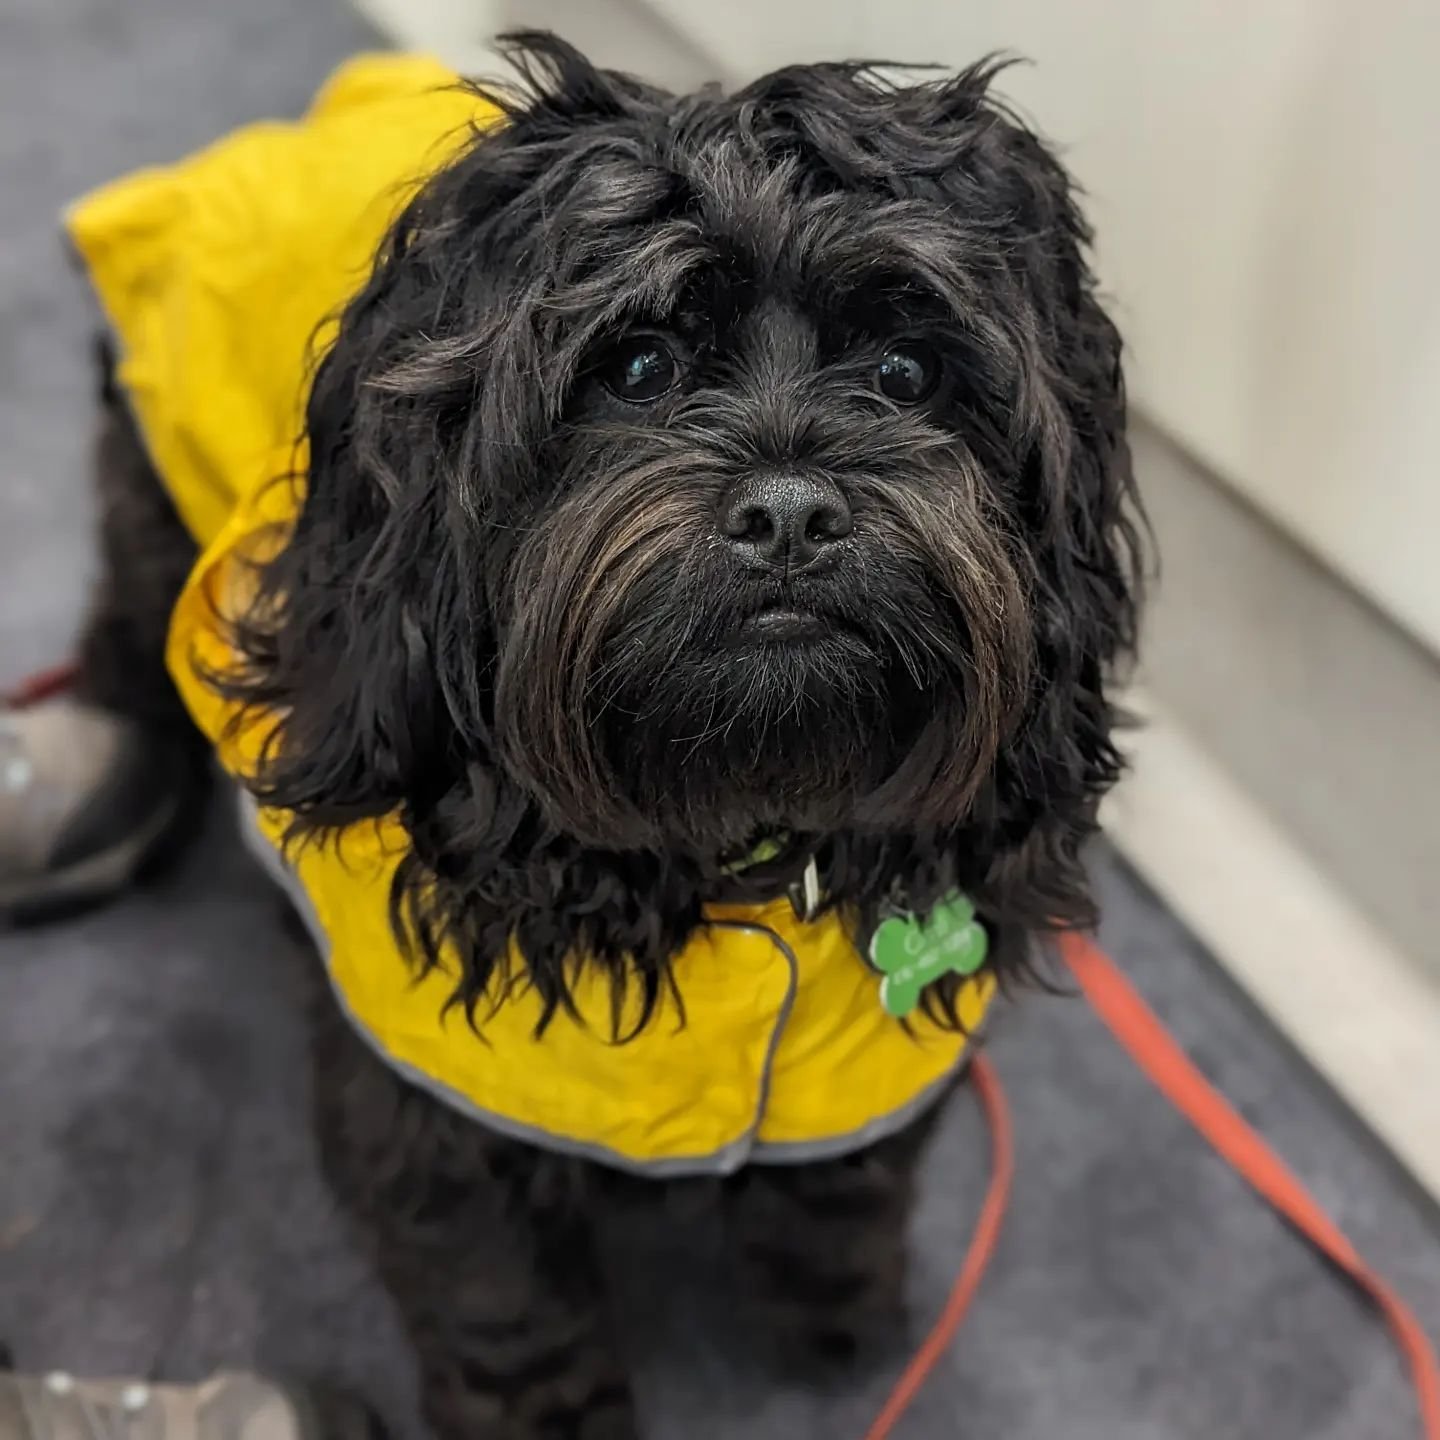 Gimli is ready for the stormy weather ahead with his stylish yellow raincoat! ☔
.
.
.
.
#horseshoevalleyvet #vet #vetclinic #dogsofinstagram #styleinspiration #craighurst